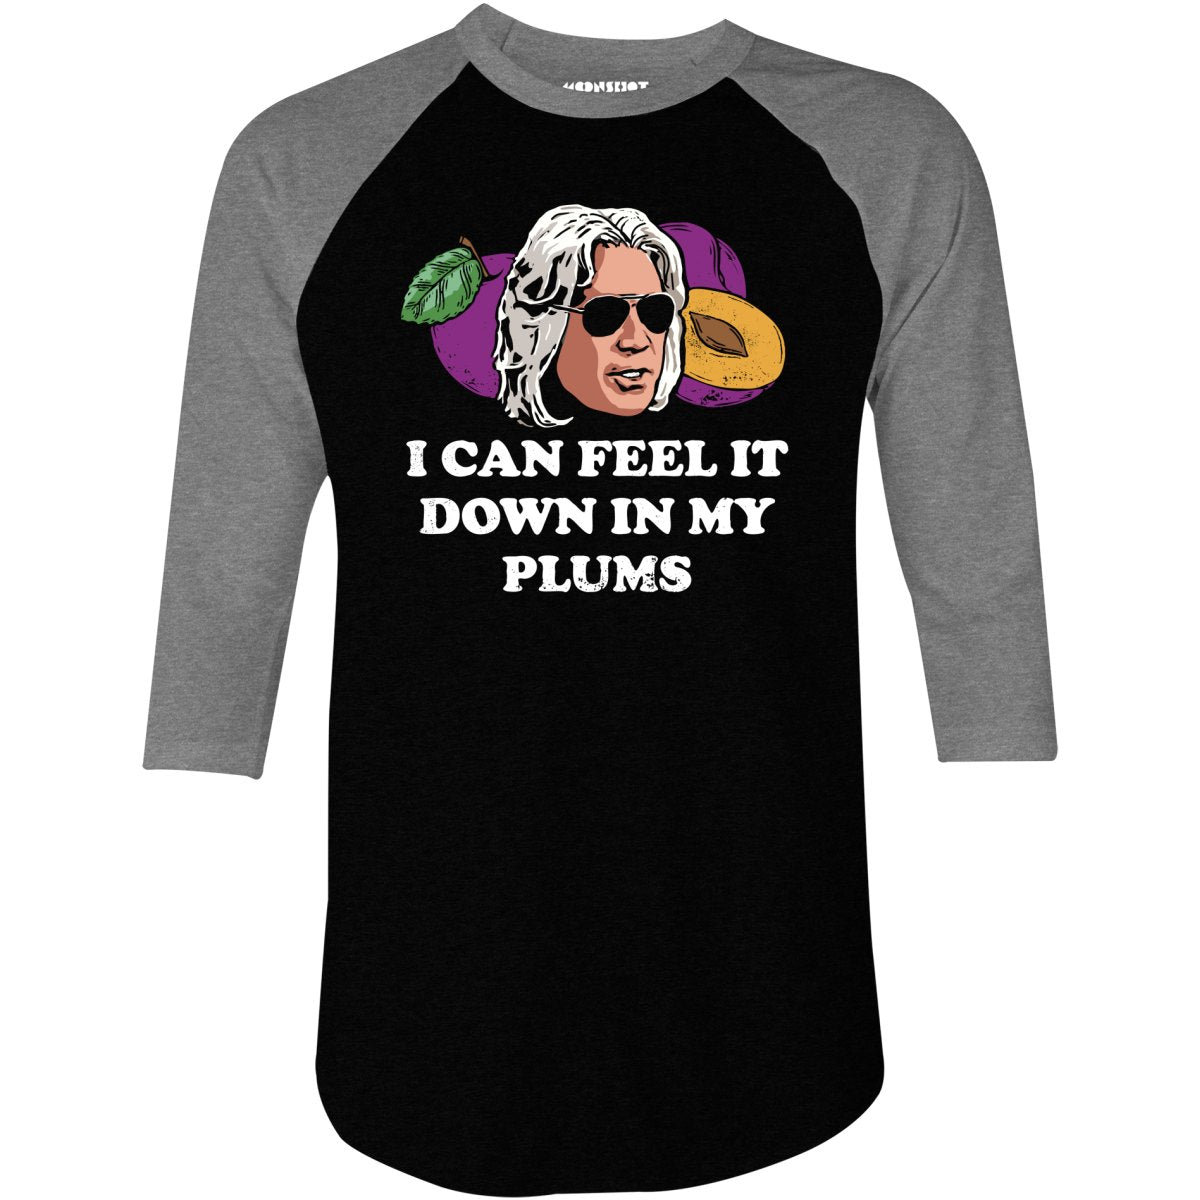 I Can Feel it Down in My Plums - 3/4 Sleeve Raglan T-Shirt